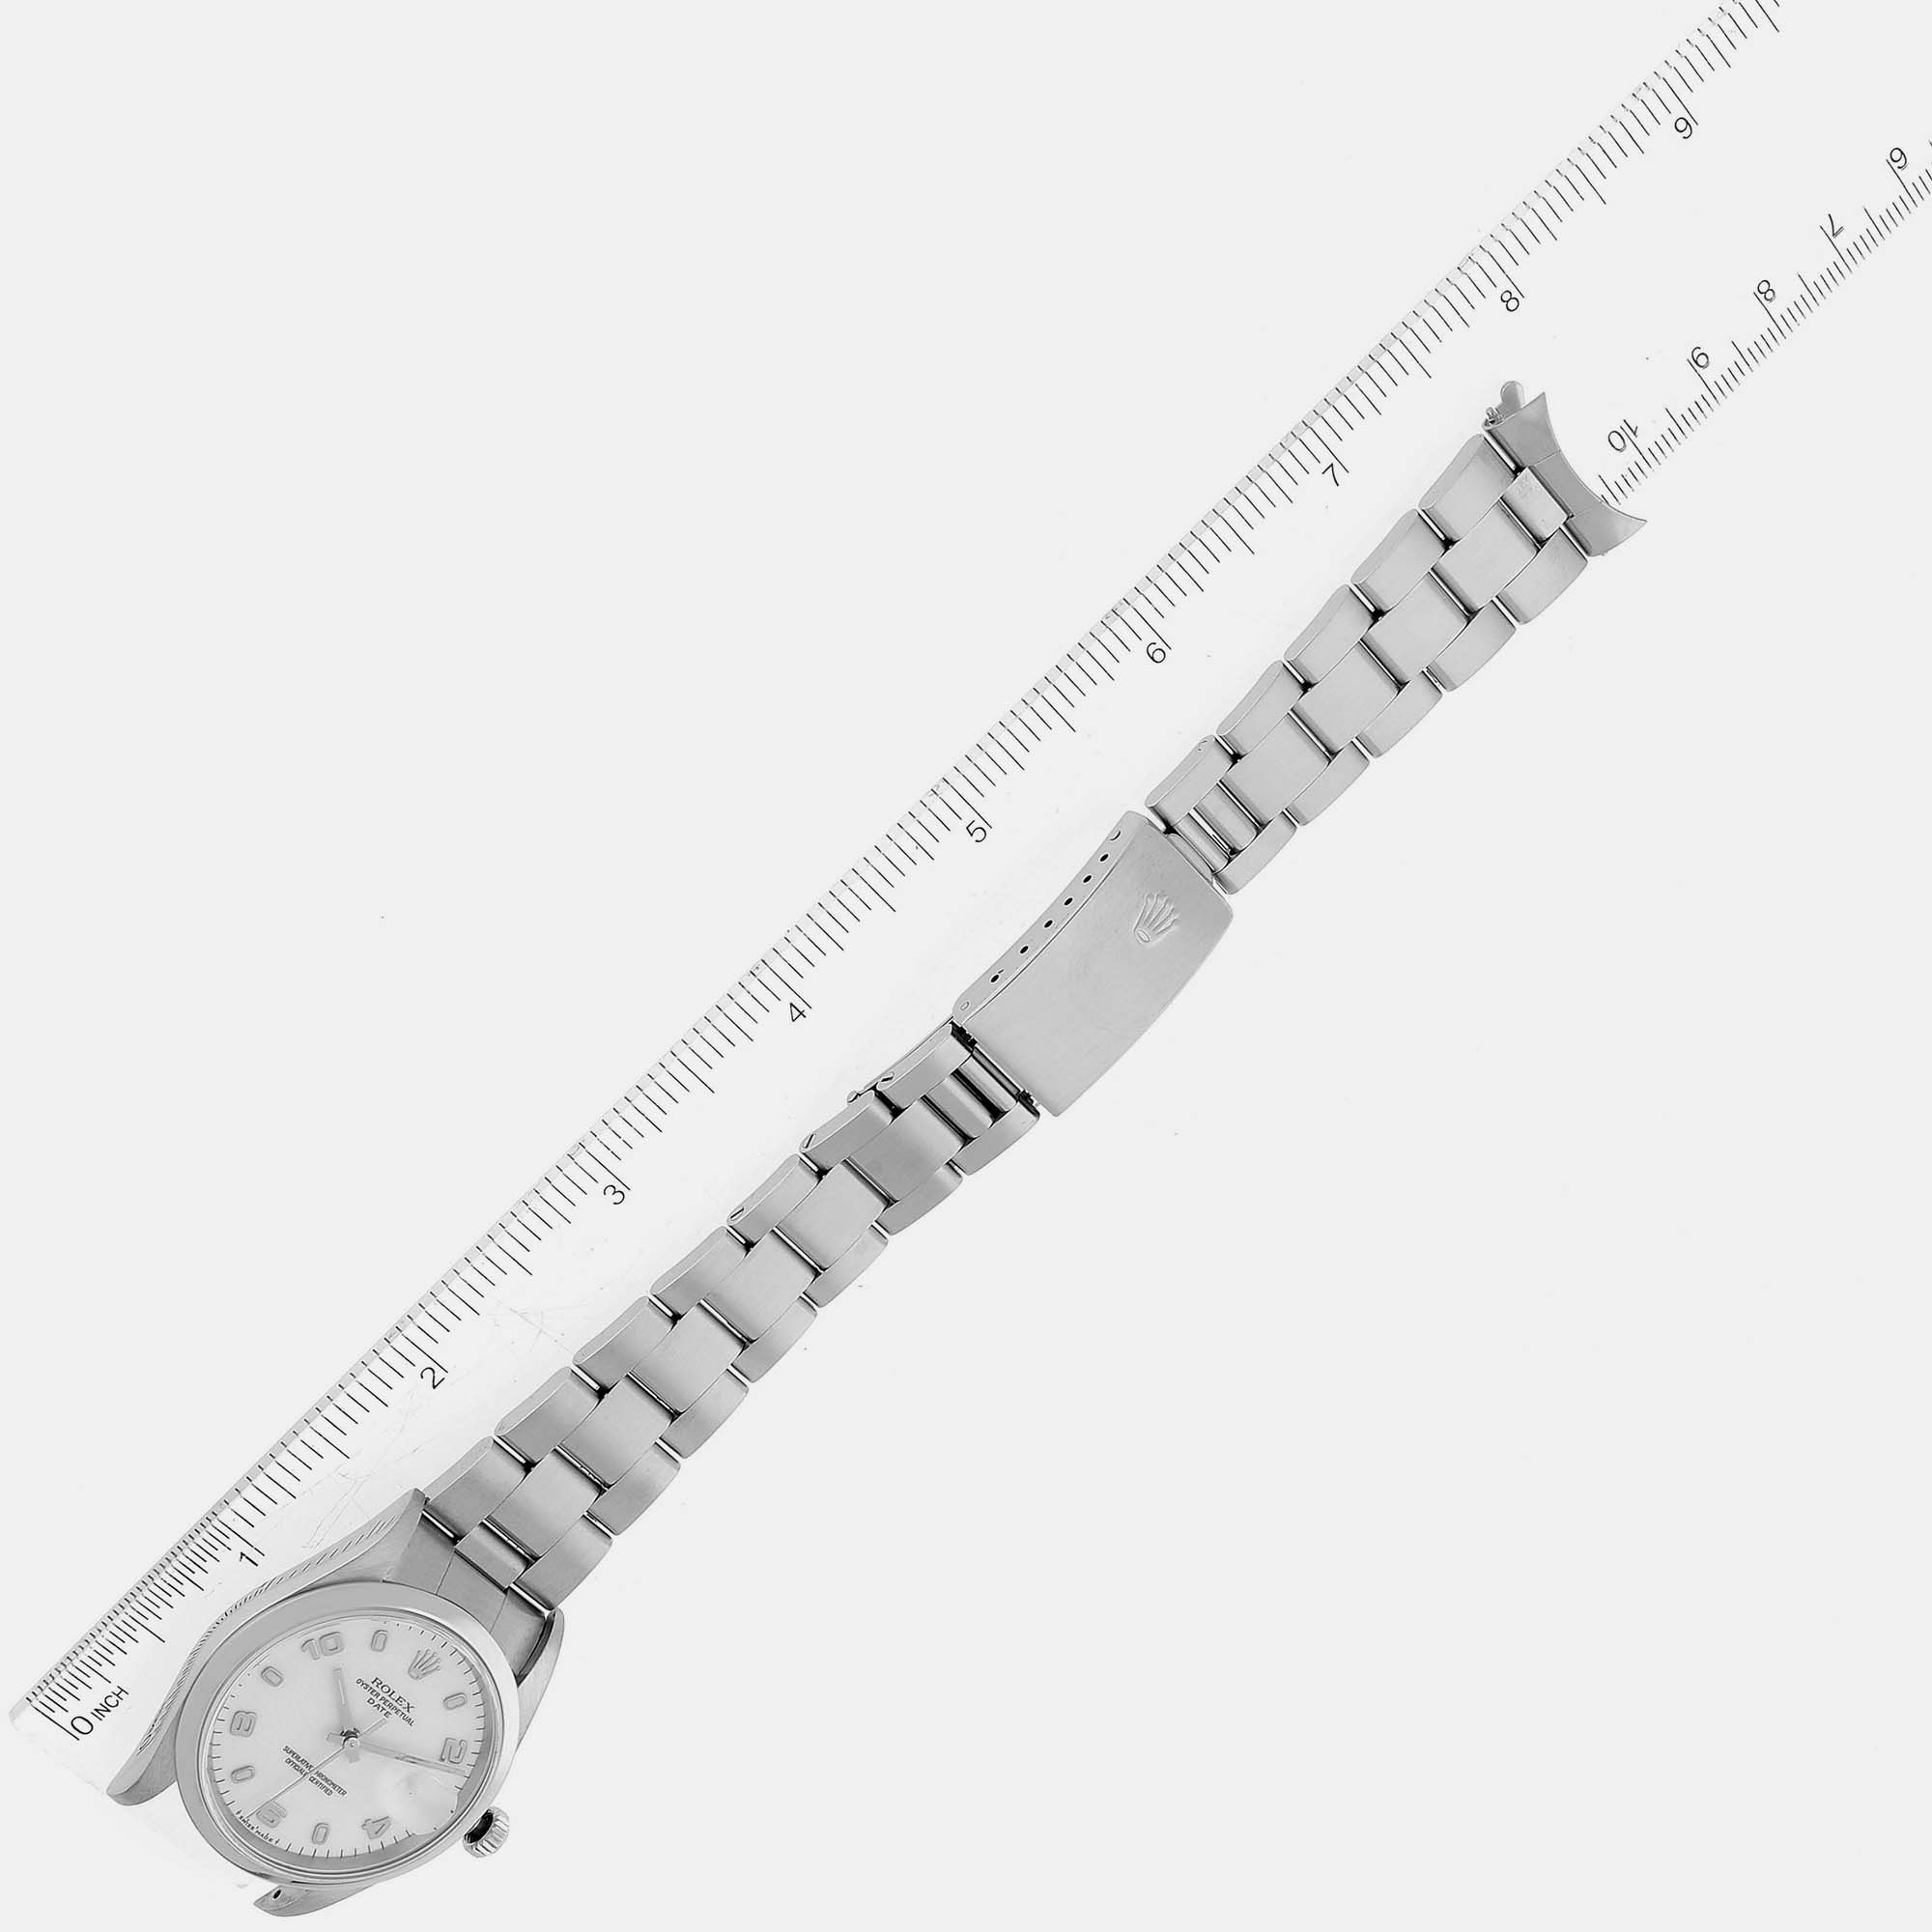 Rolex Date White Dial Oyster Bracelet Steel Mens Watch 15200 34 Mm